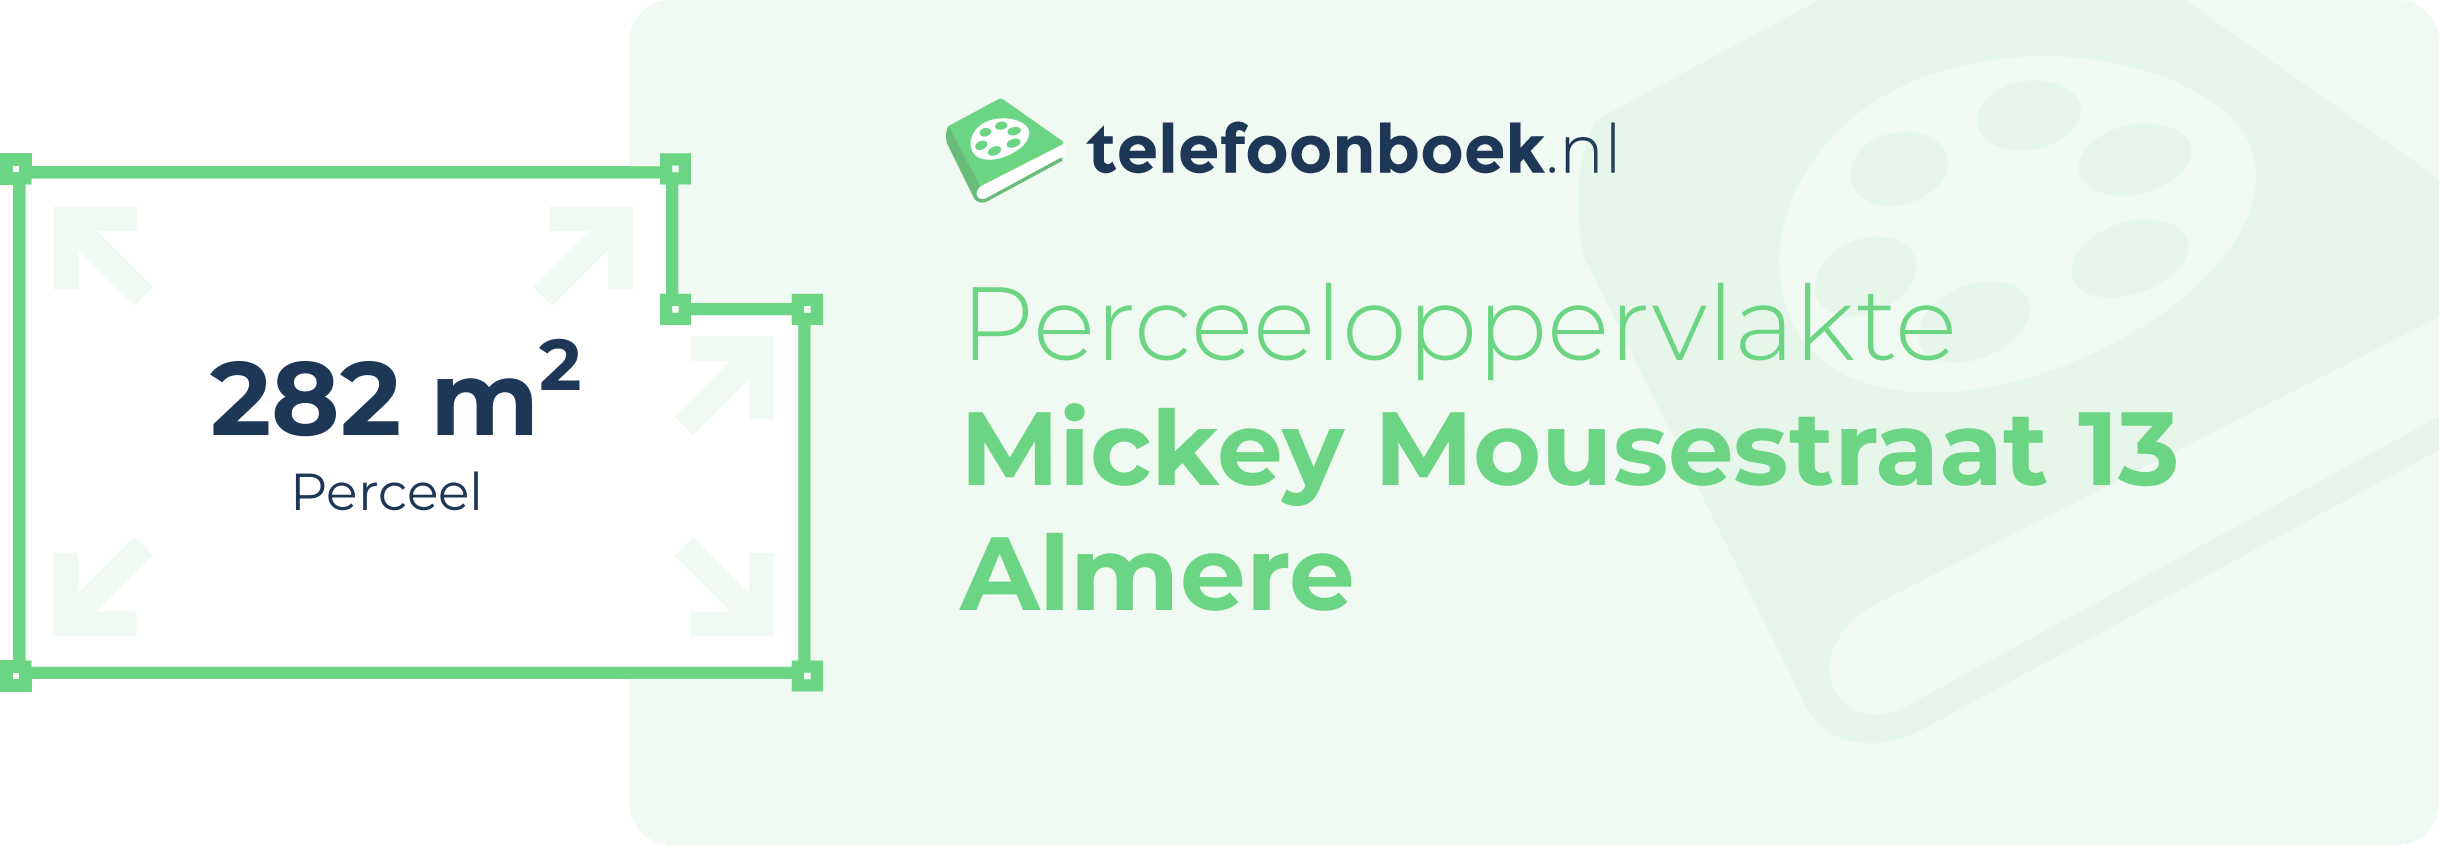 Perceeloppervlakte Mickey Mousestraat 13 Almere